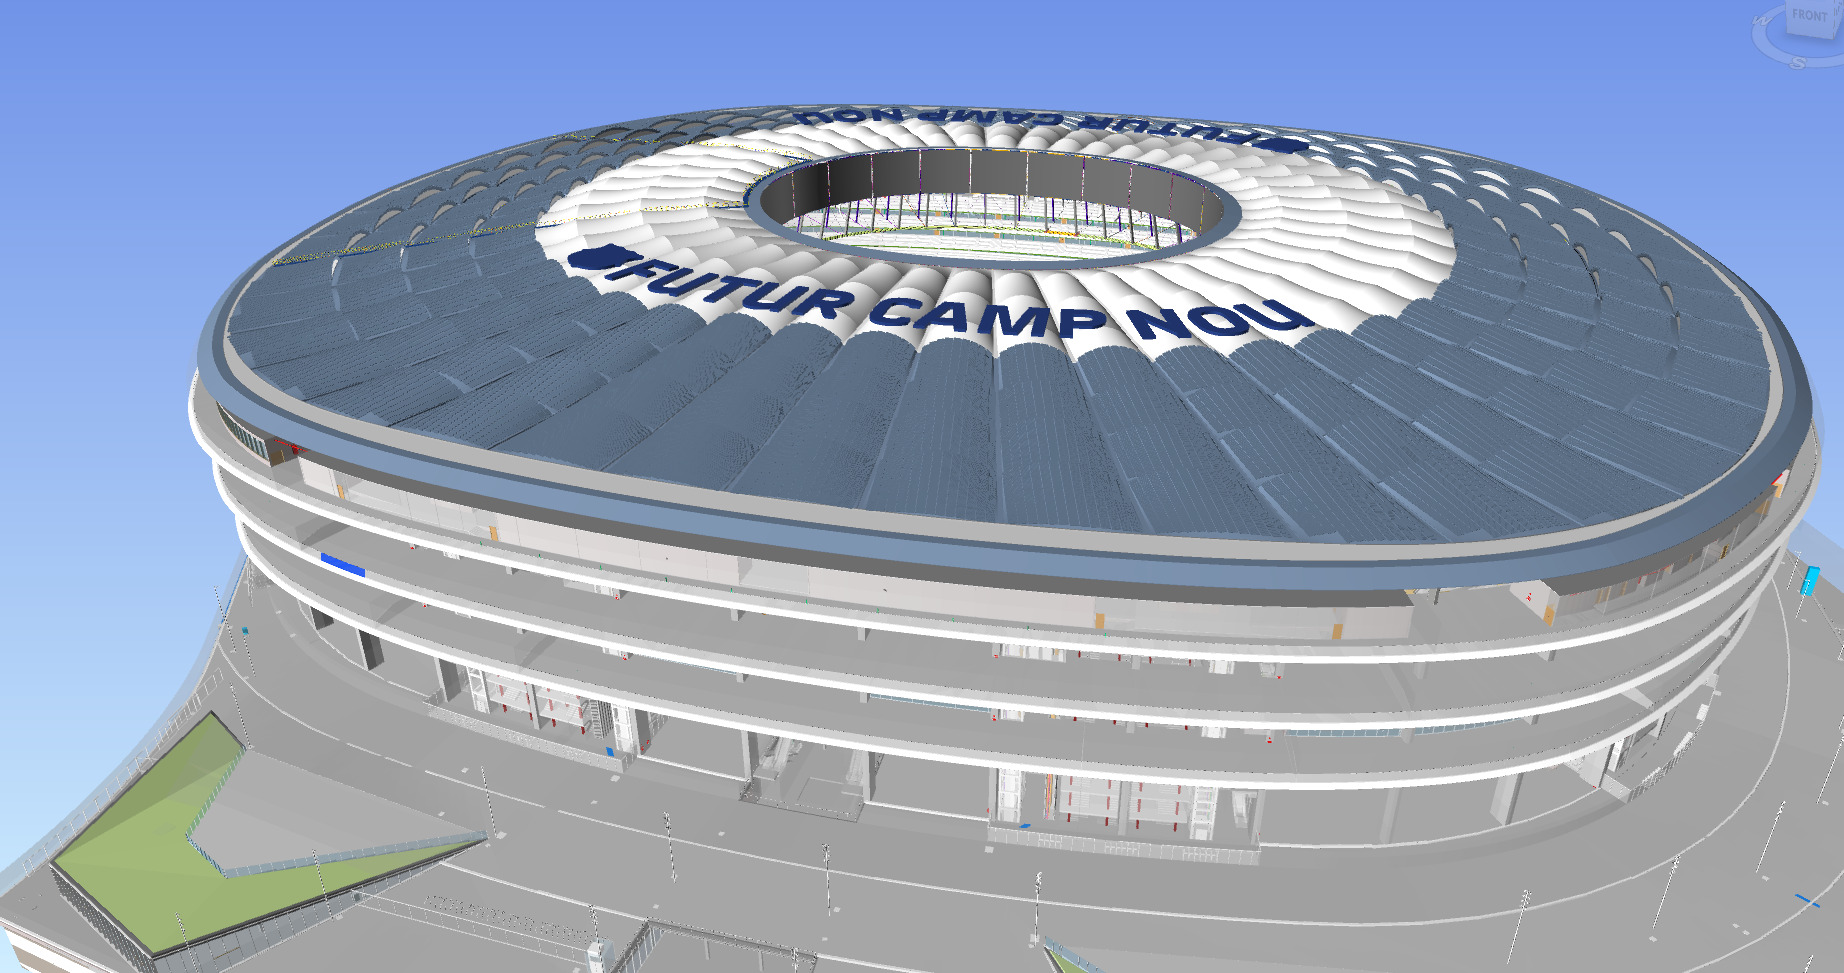 H ελληνική SDENG συμβάλλει στην ανακατασκευή του γηπέδου της Μπαρτσελόνα – Το έργο του Future Camp Nou